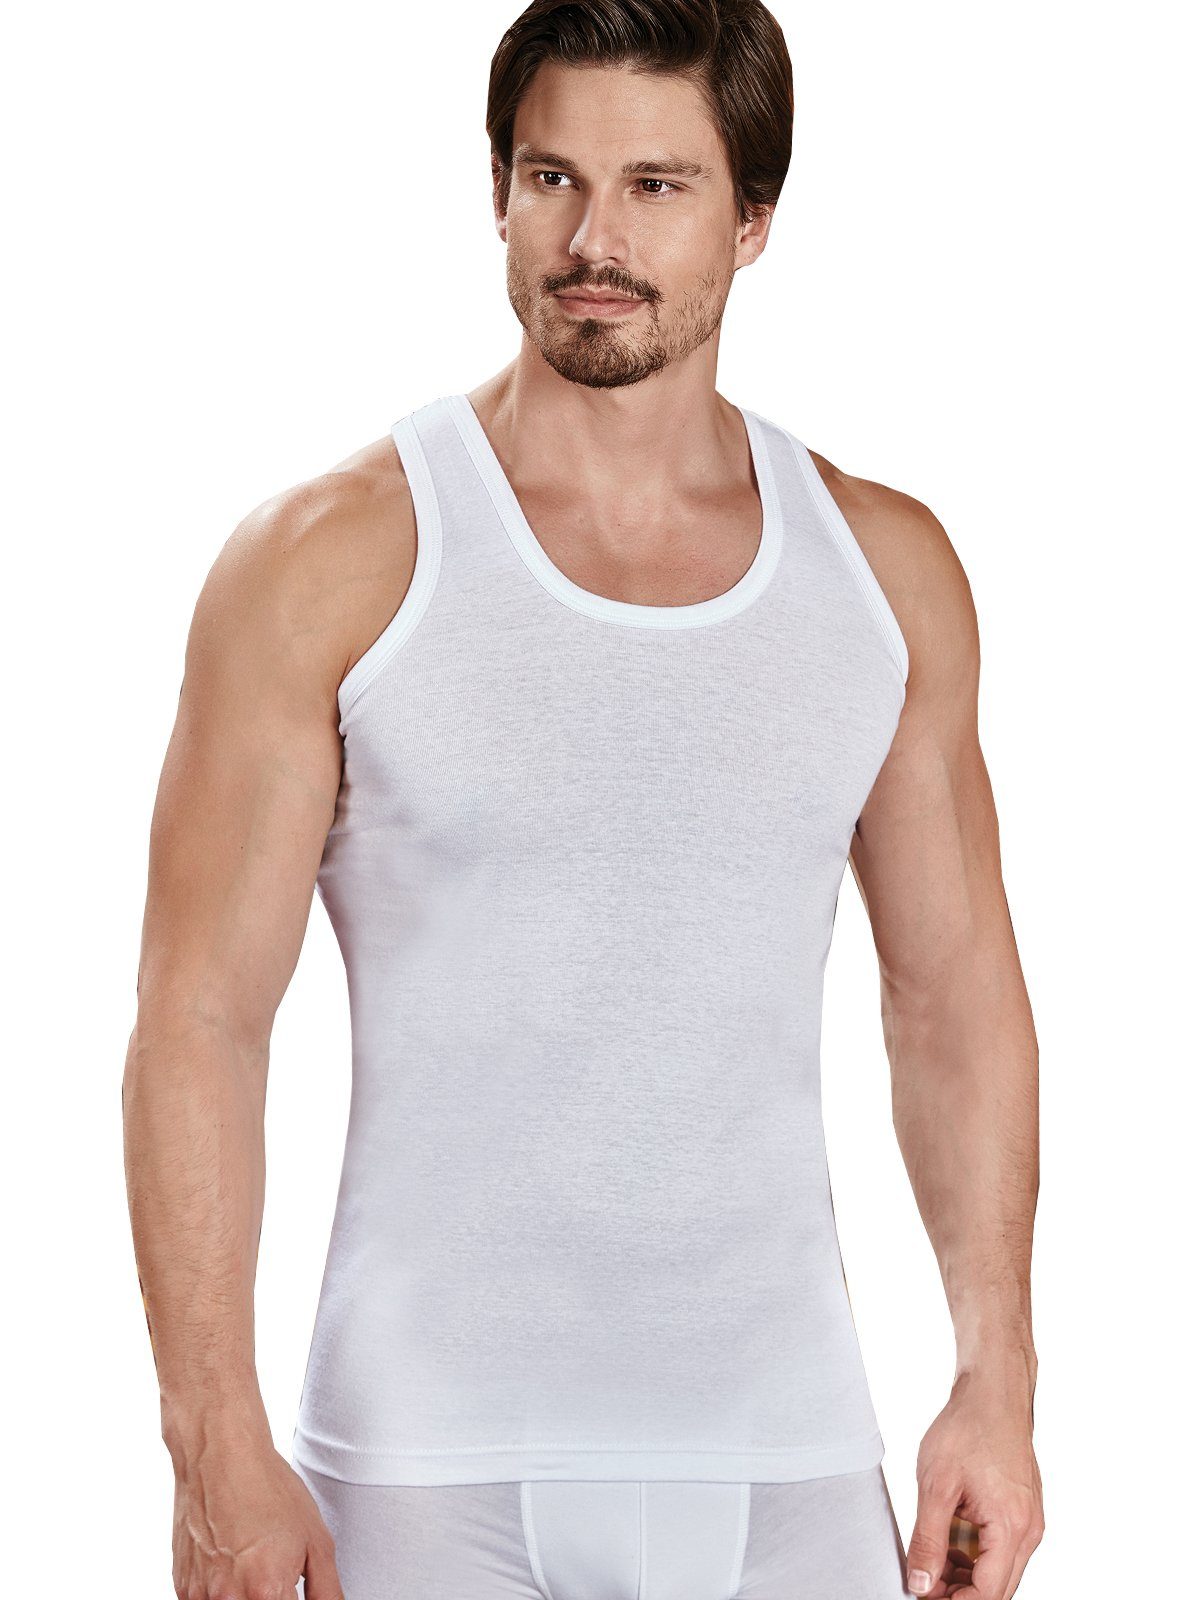 Berrak Collection Unterhemd Herren Jersey Business Achselshirt Slimfit BS1030 Weiß